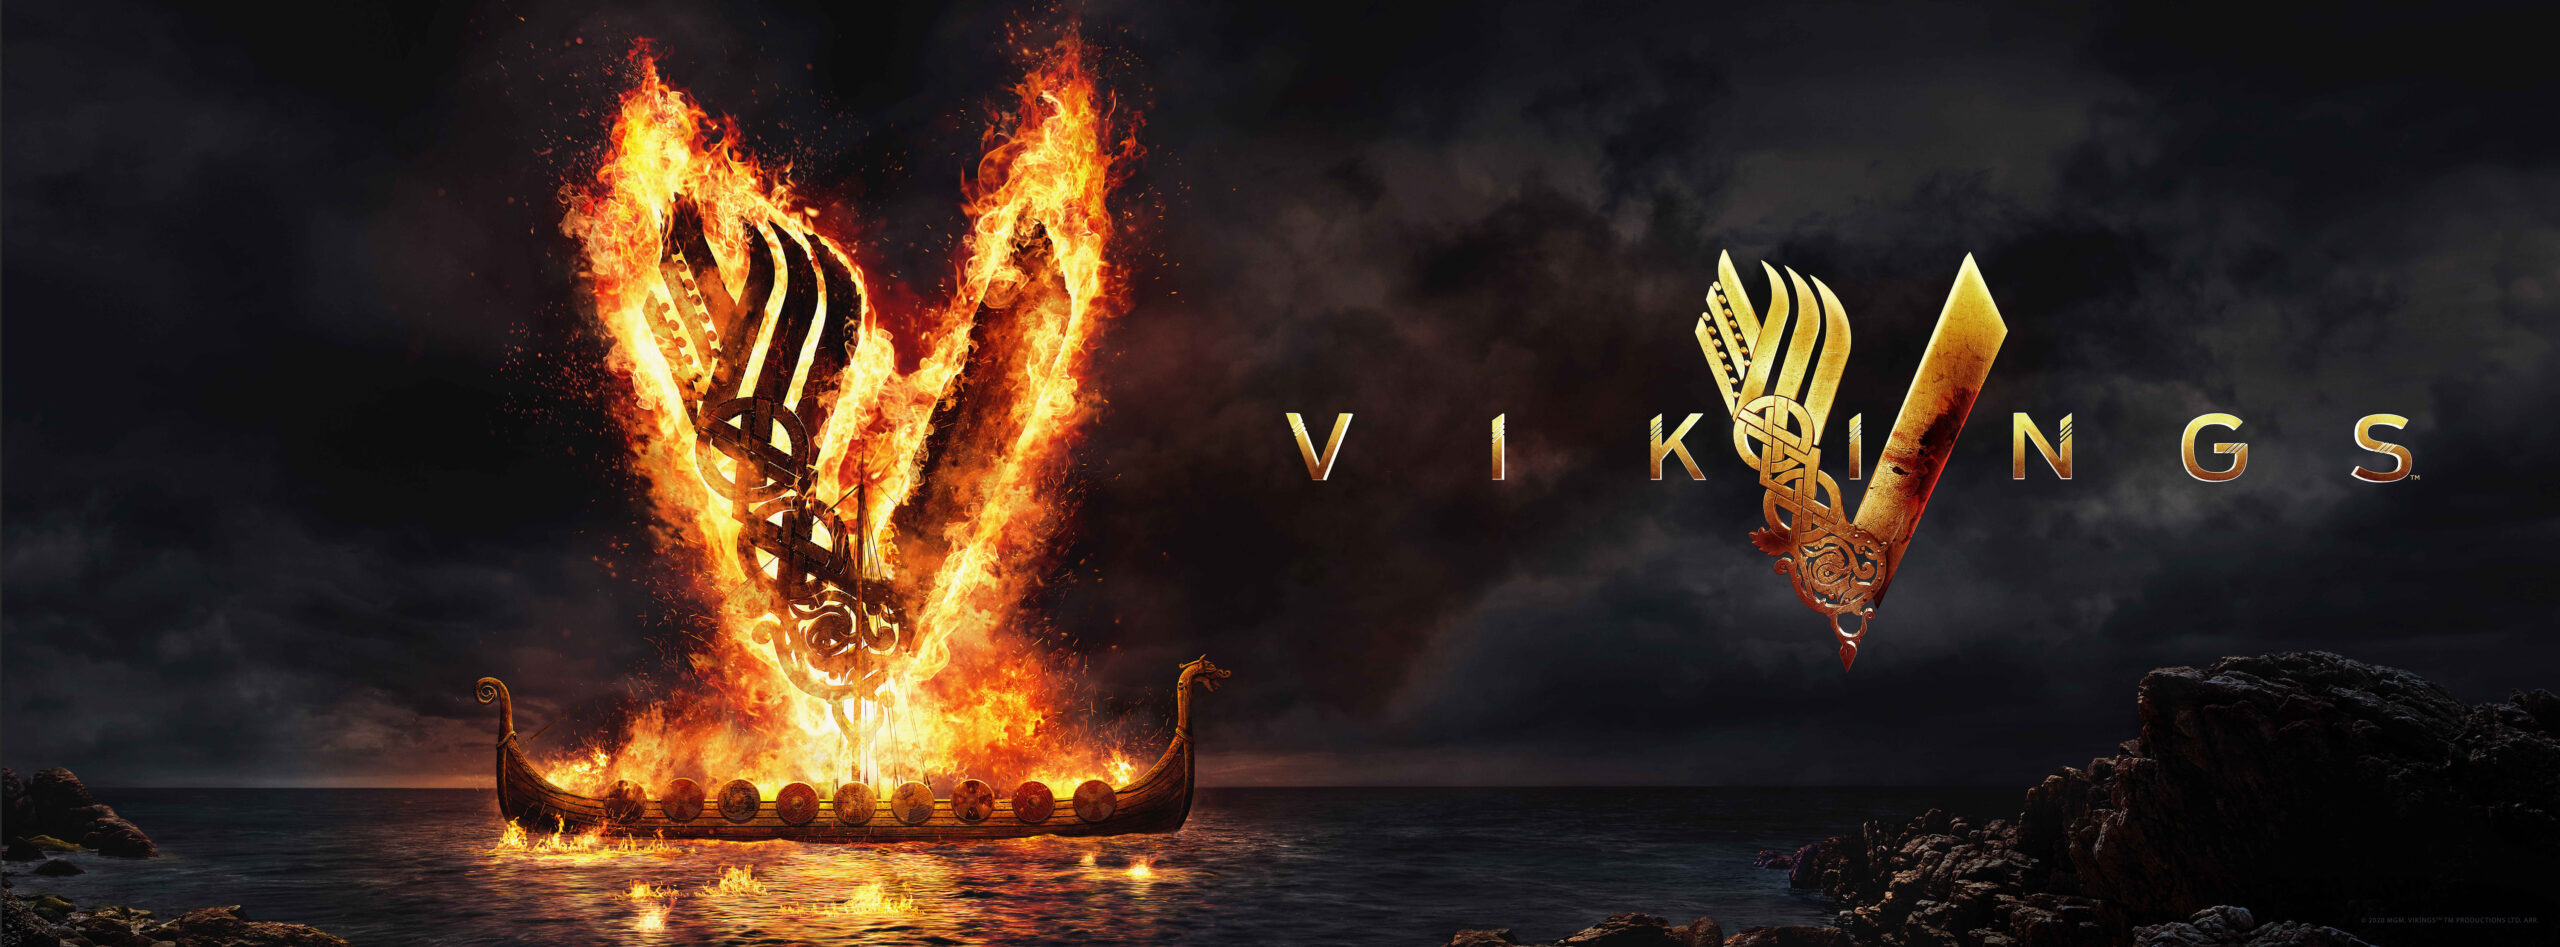 Vikings (stagione 6b)